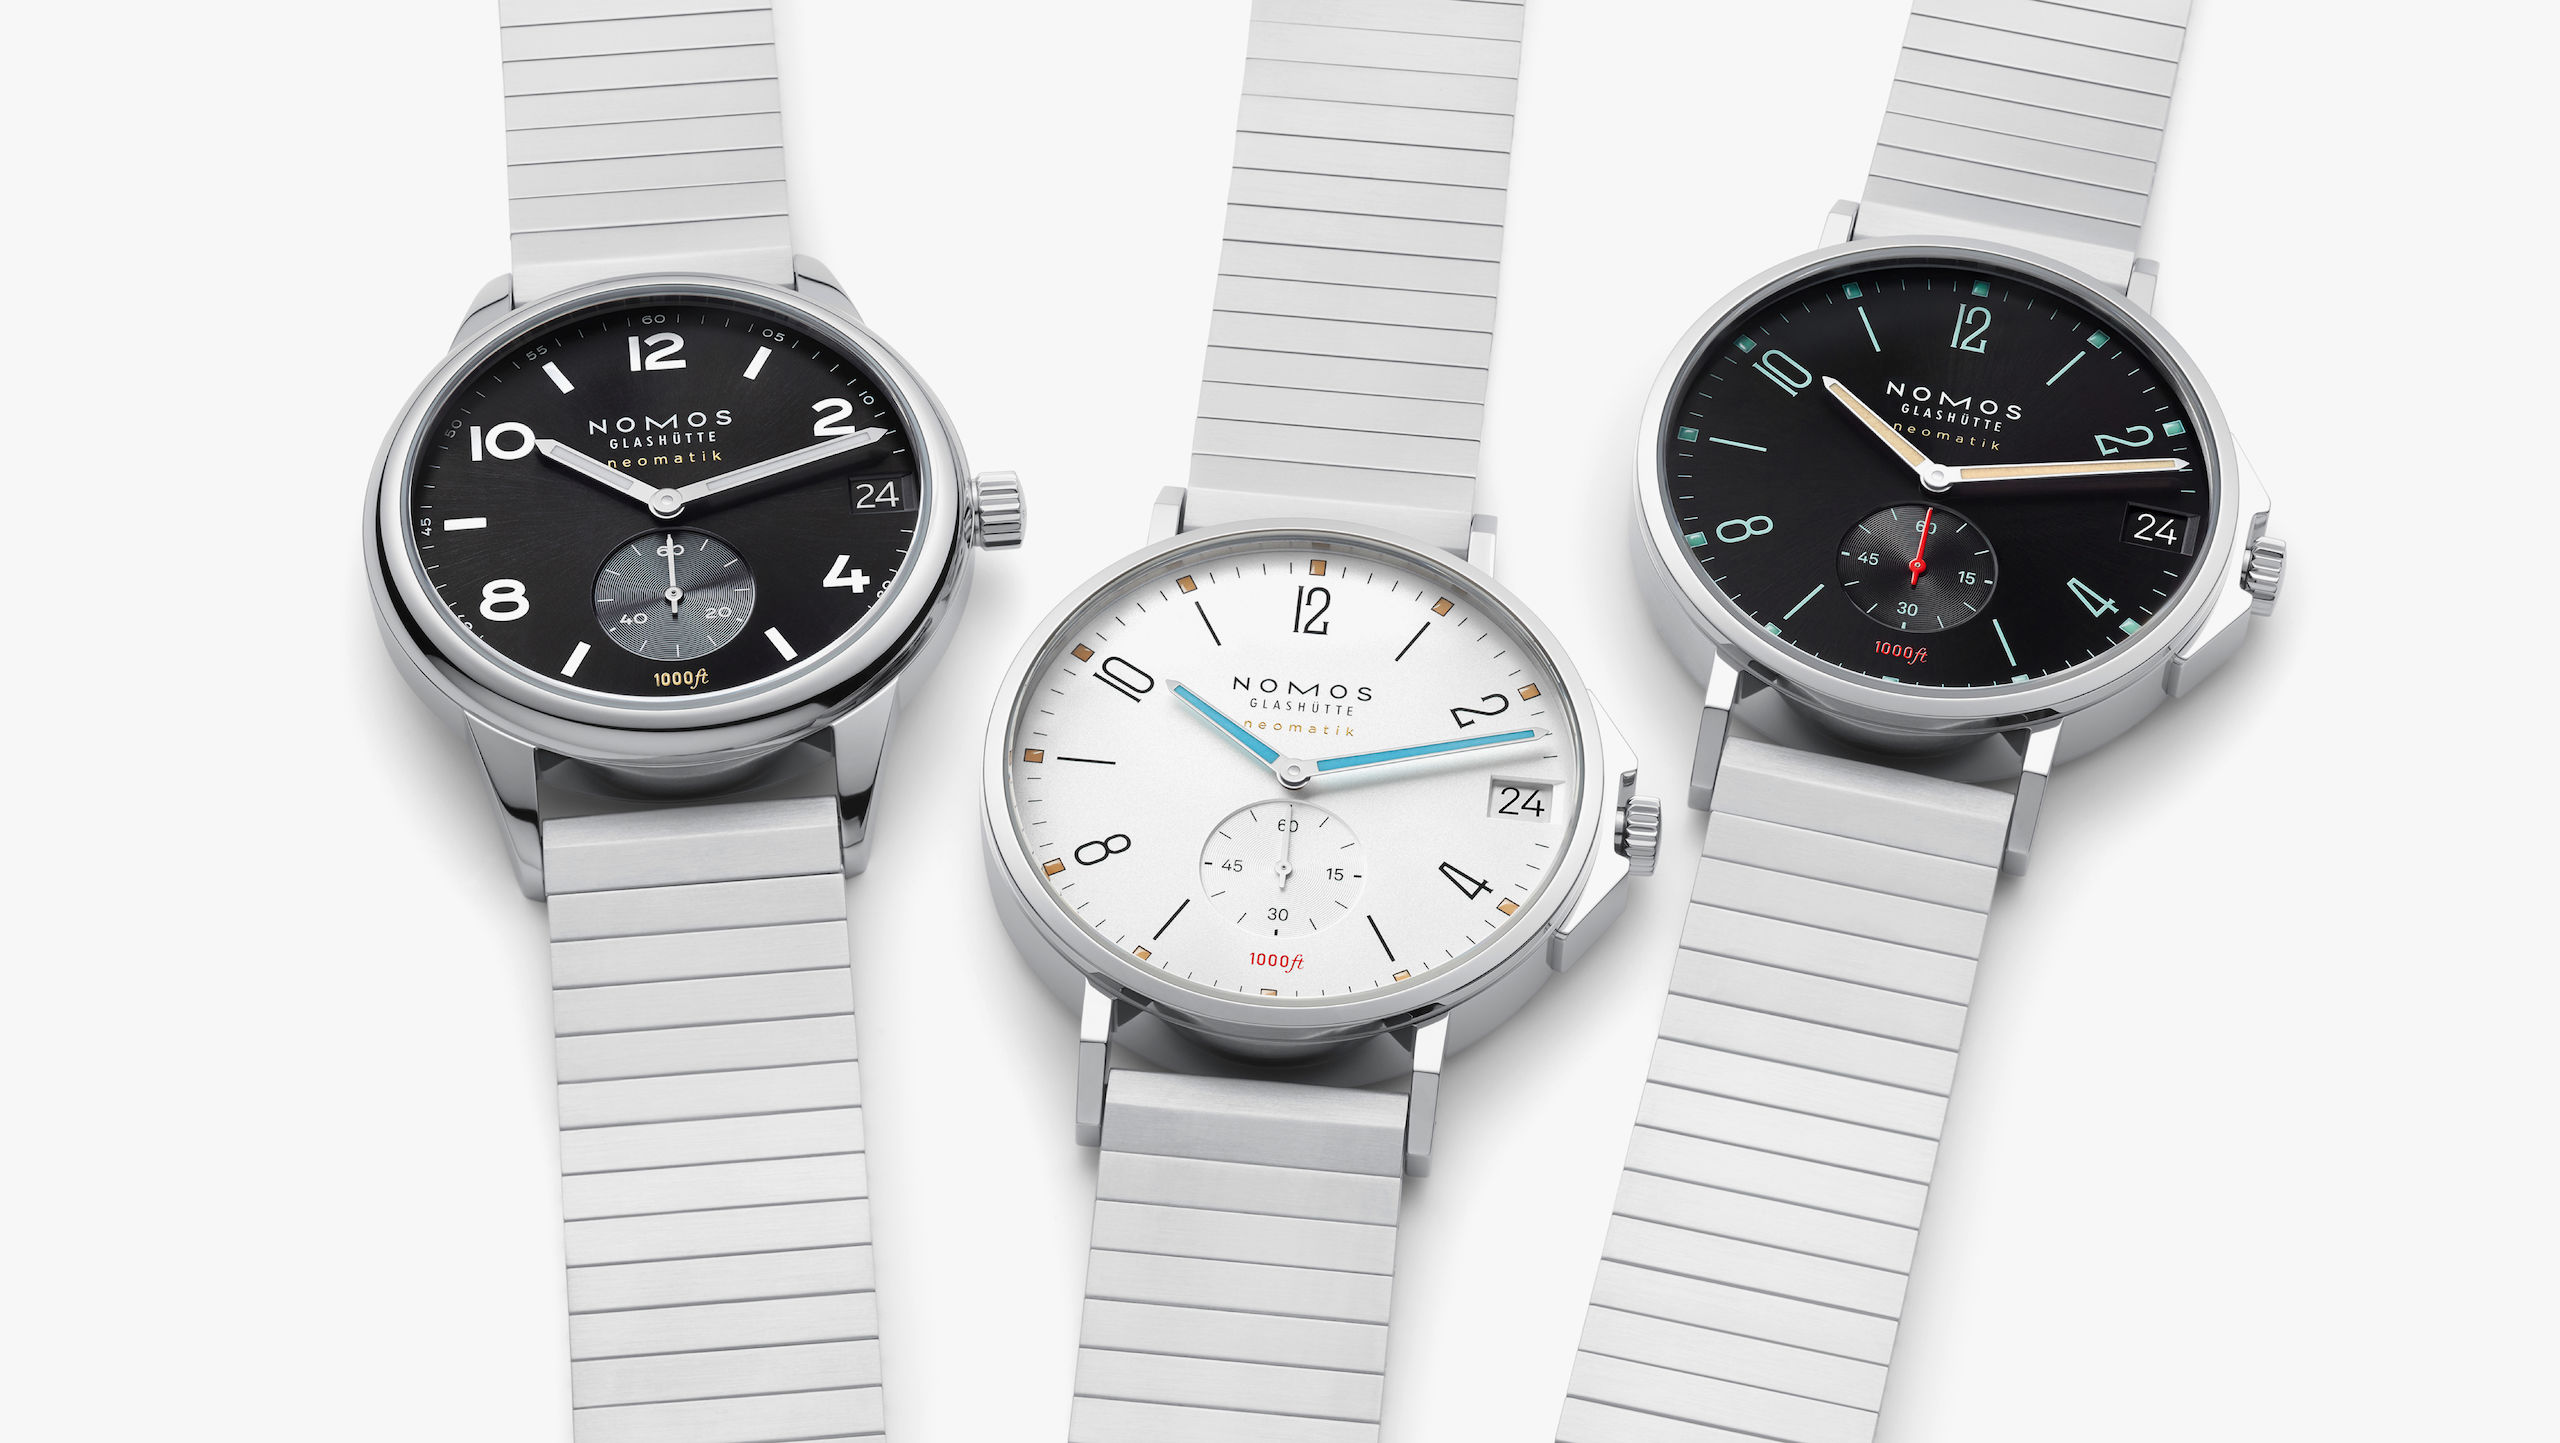 13 Best German Watches With a Bauhaus Design